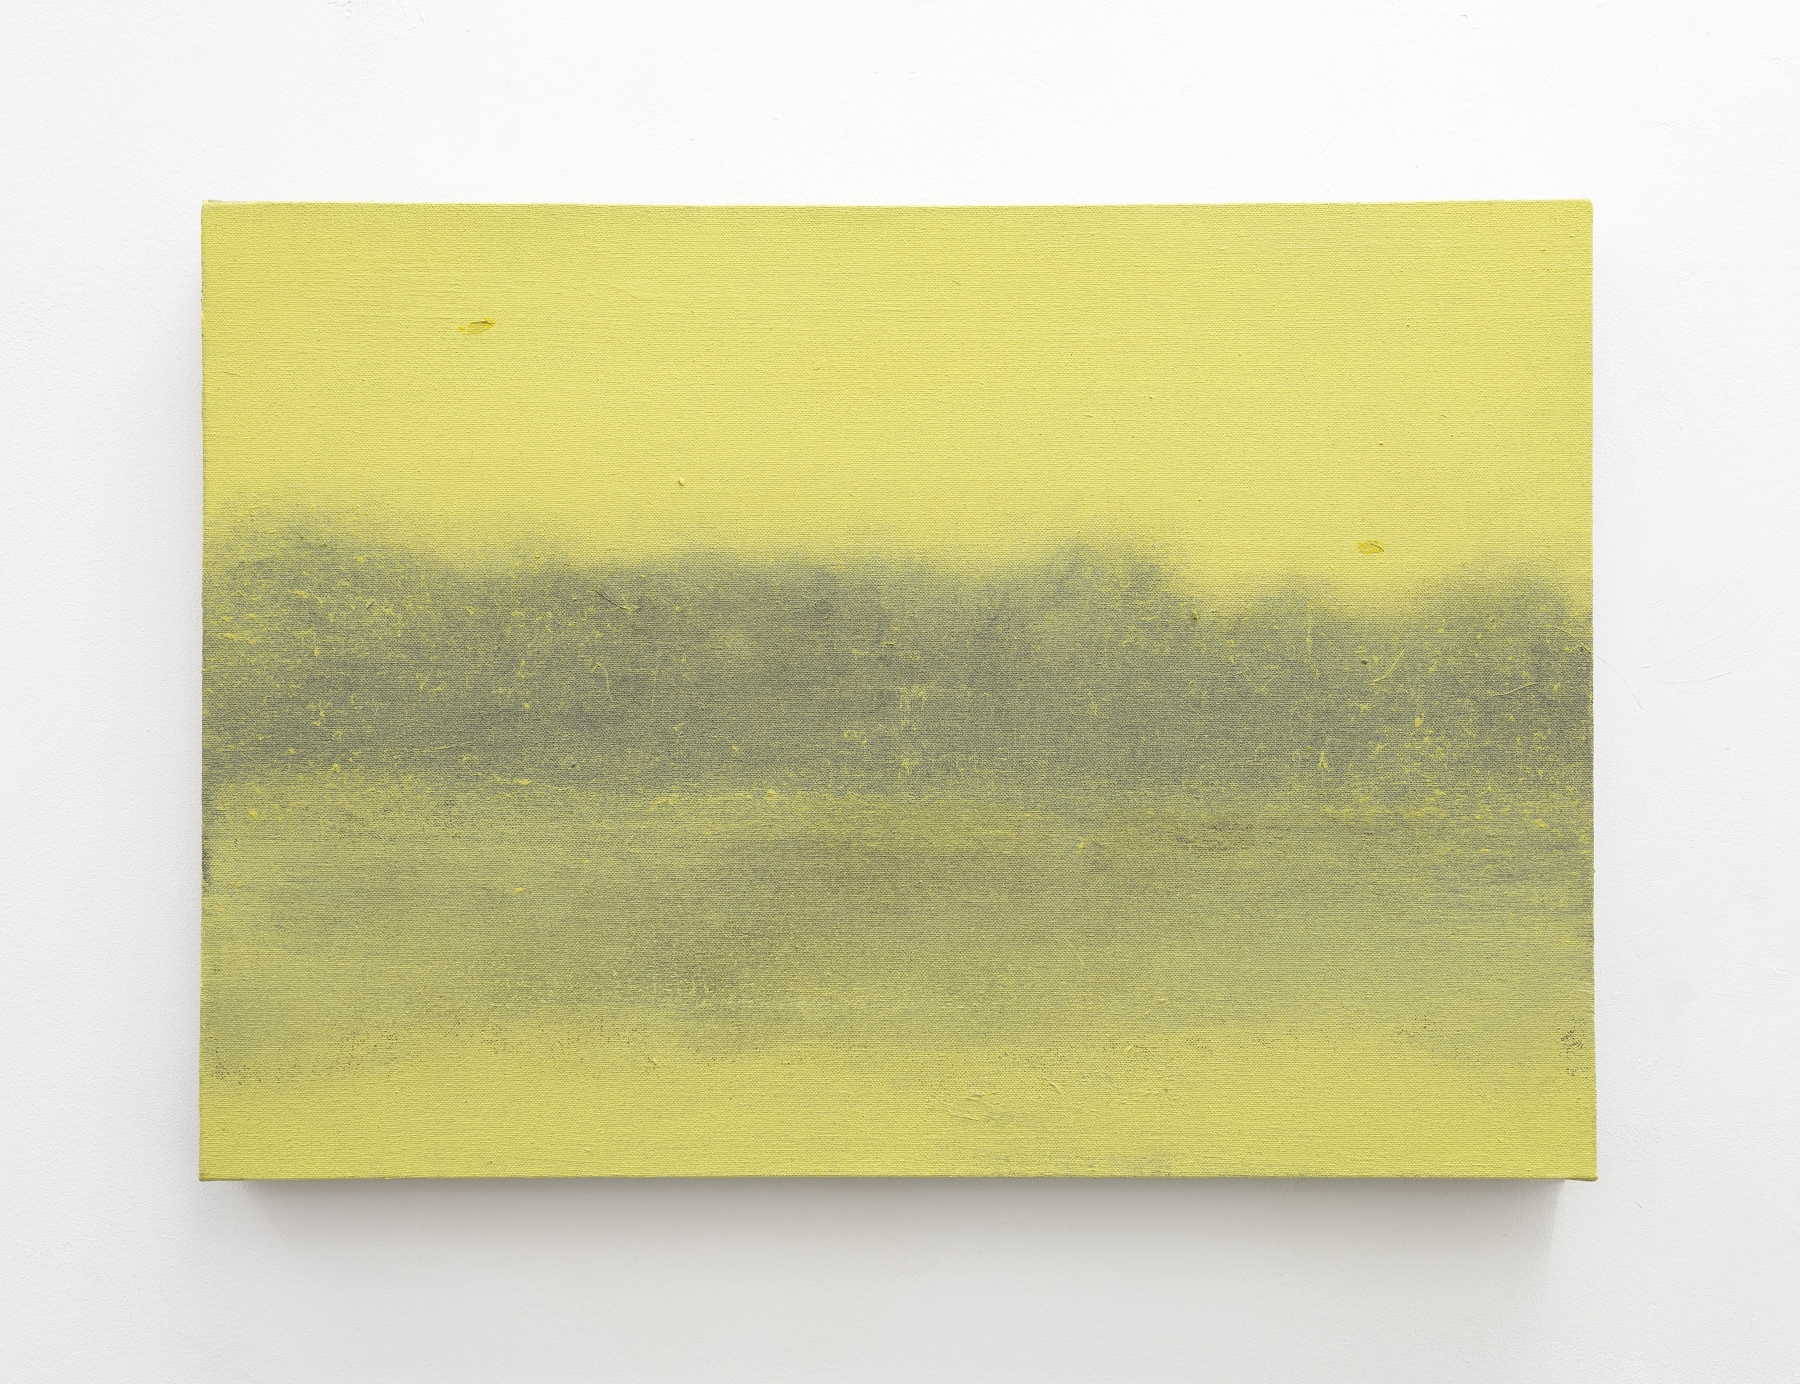 Merlin James&nbsp;
Yellow Trees, 2003
acrylic on canvas
42 x 61 cm / 16.5 x 24 in&nbsp;